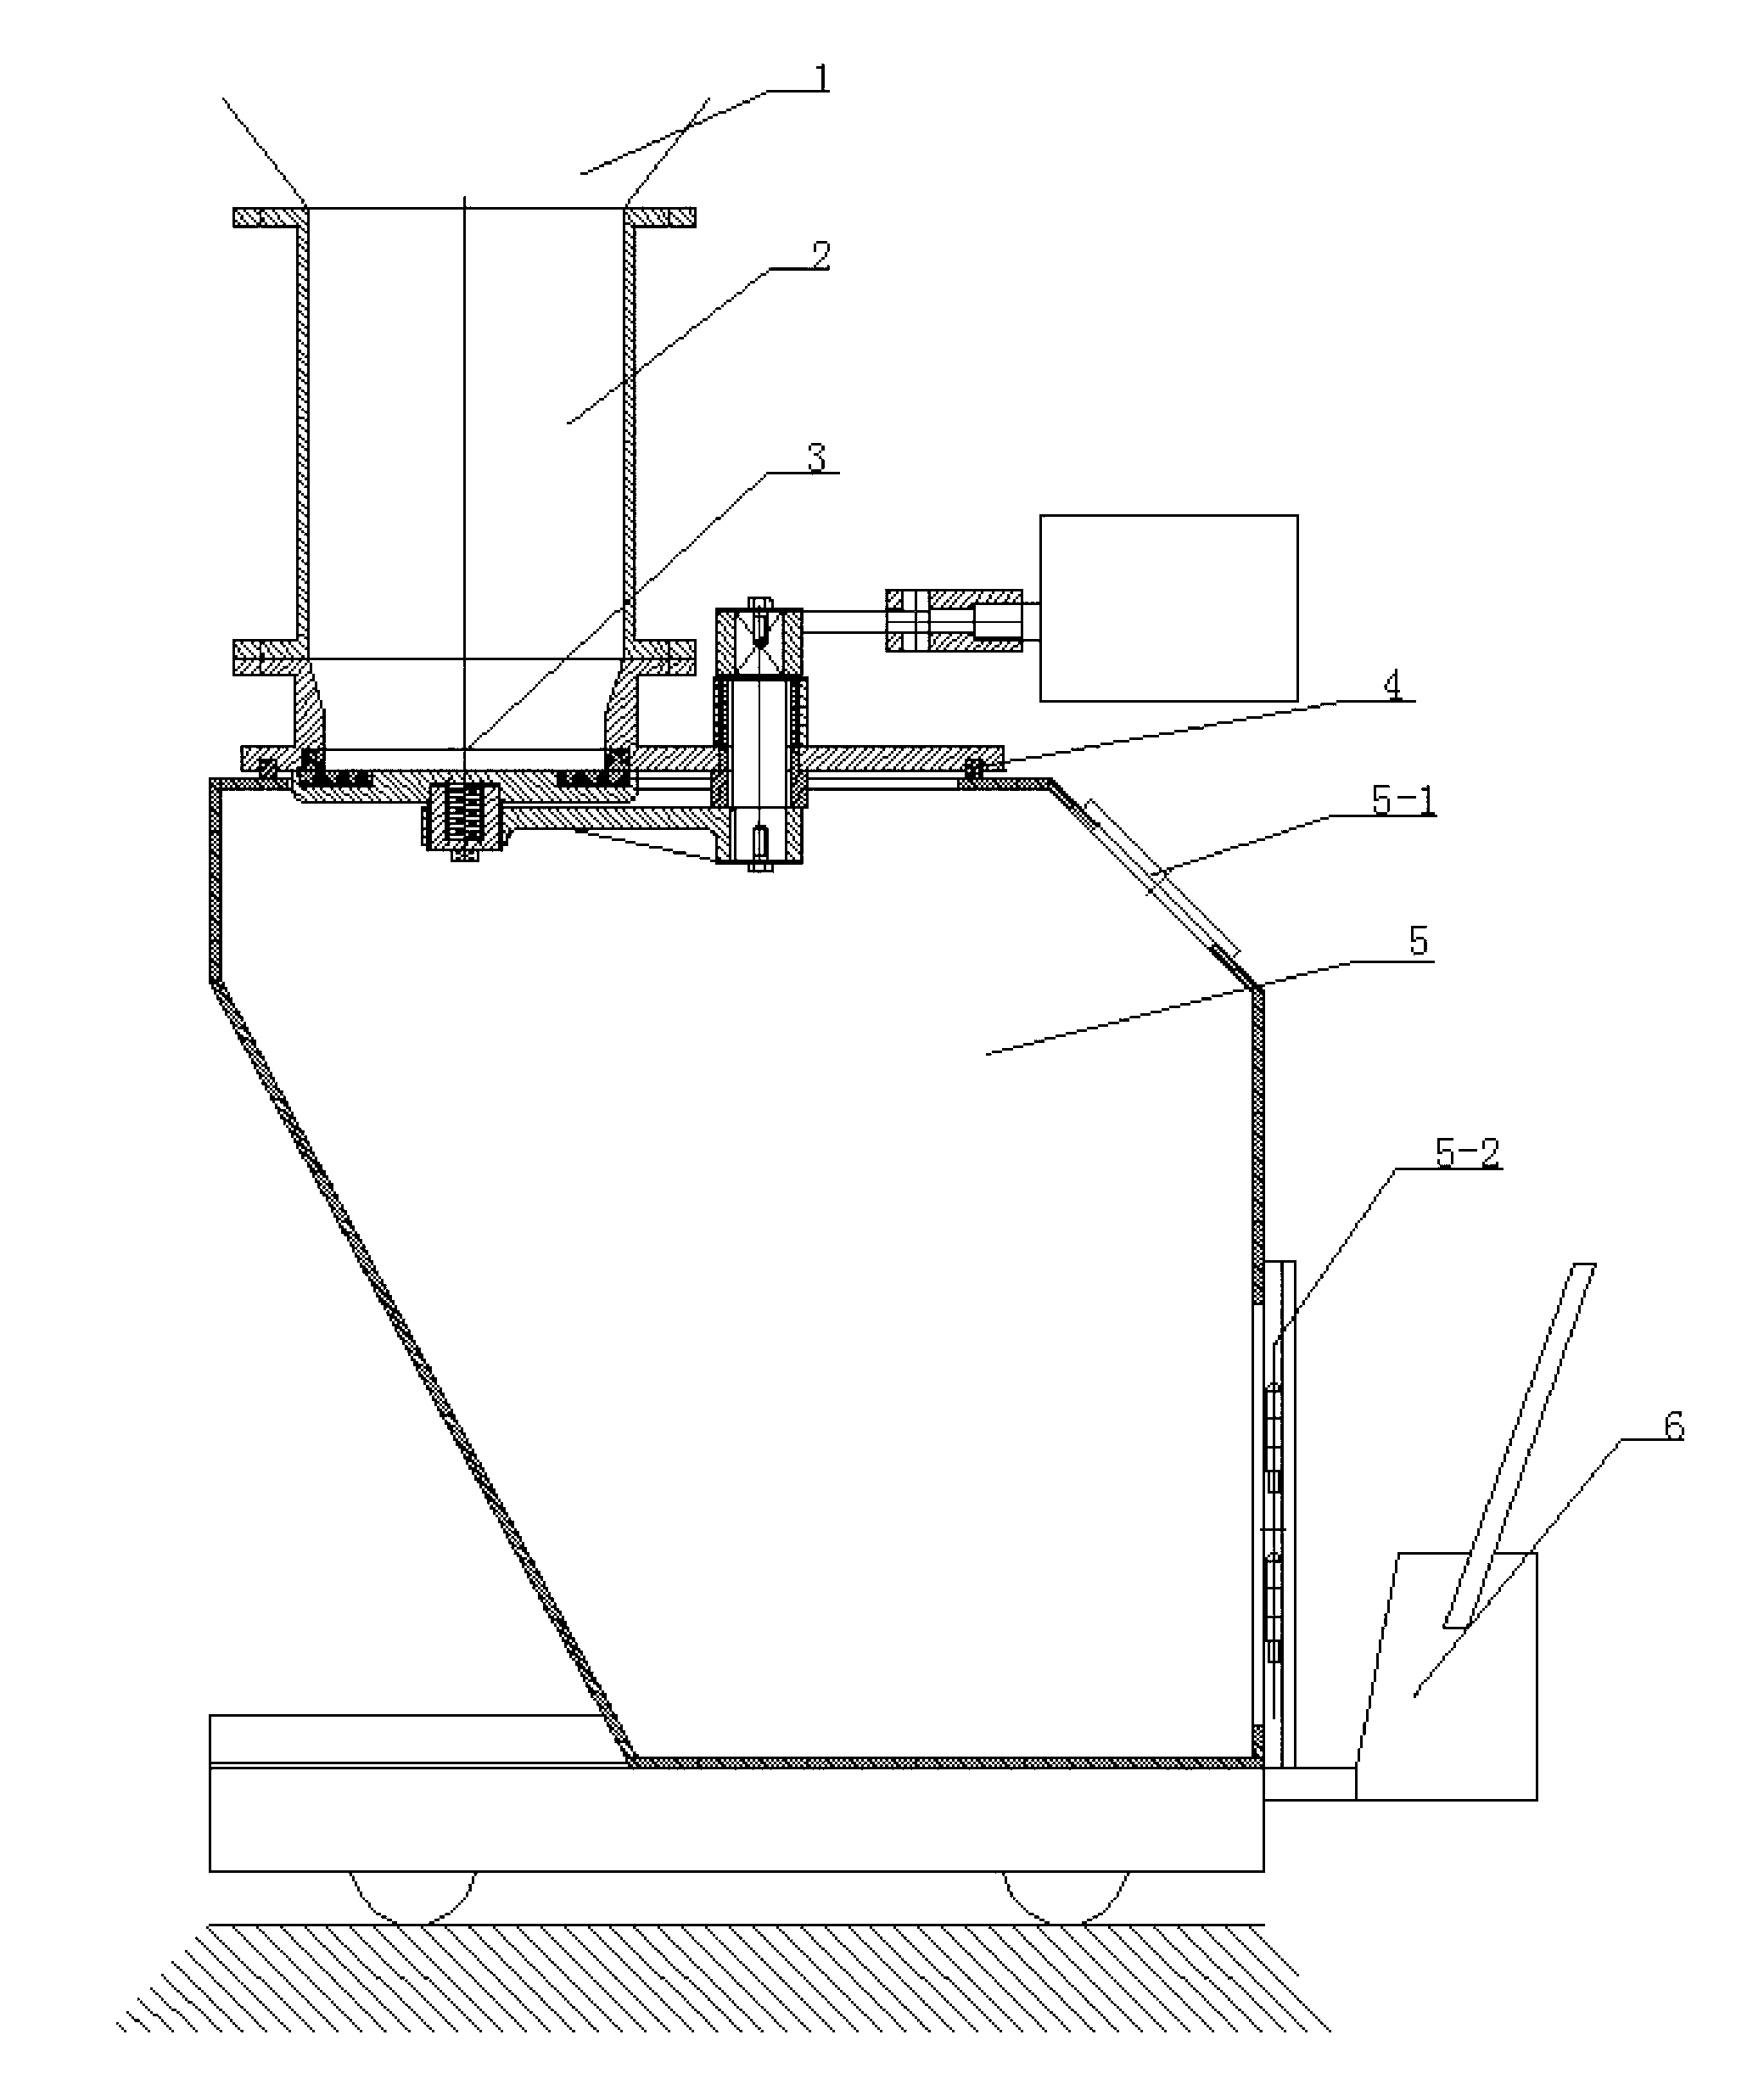 Full-sealed type slag discharging system of coal mill